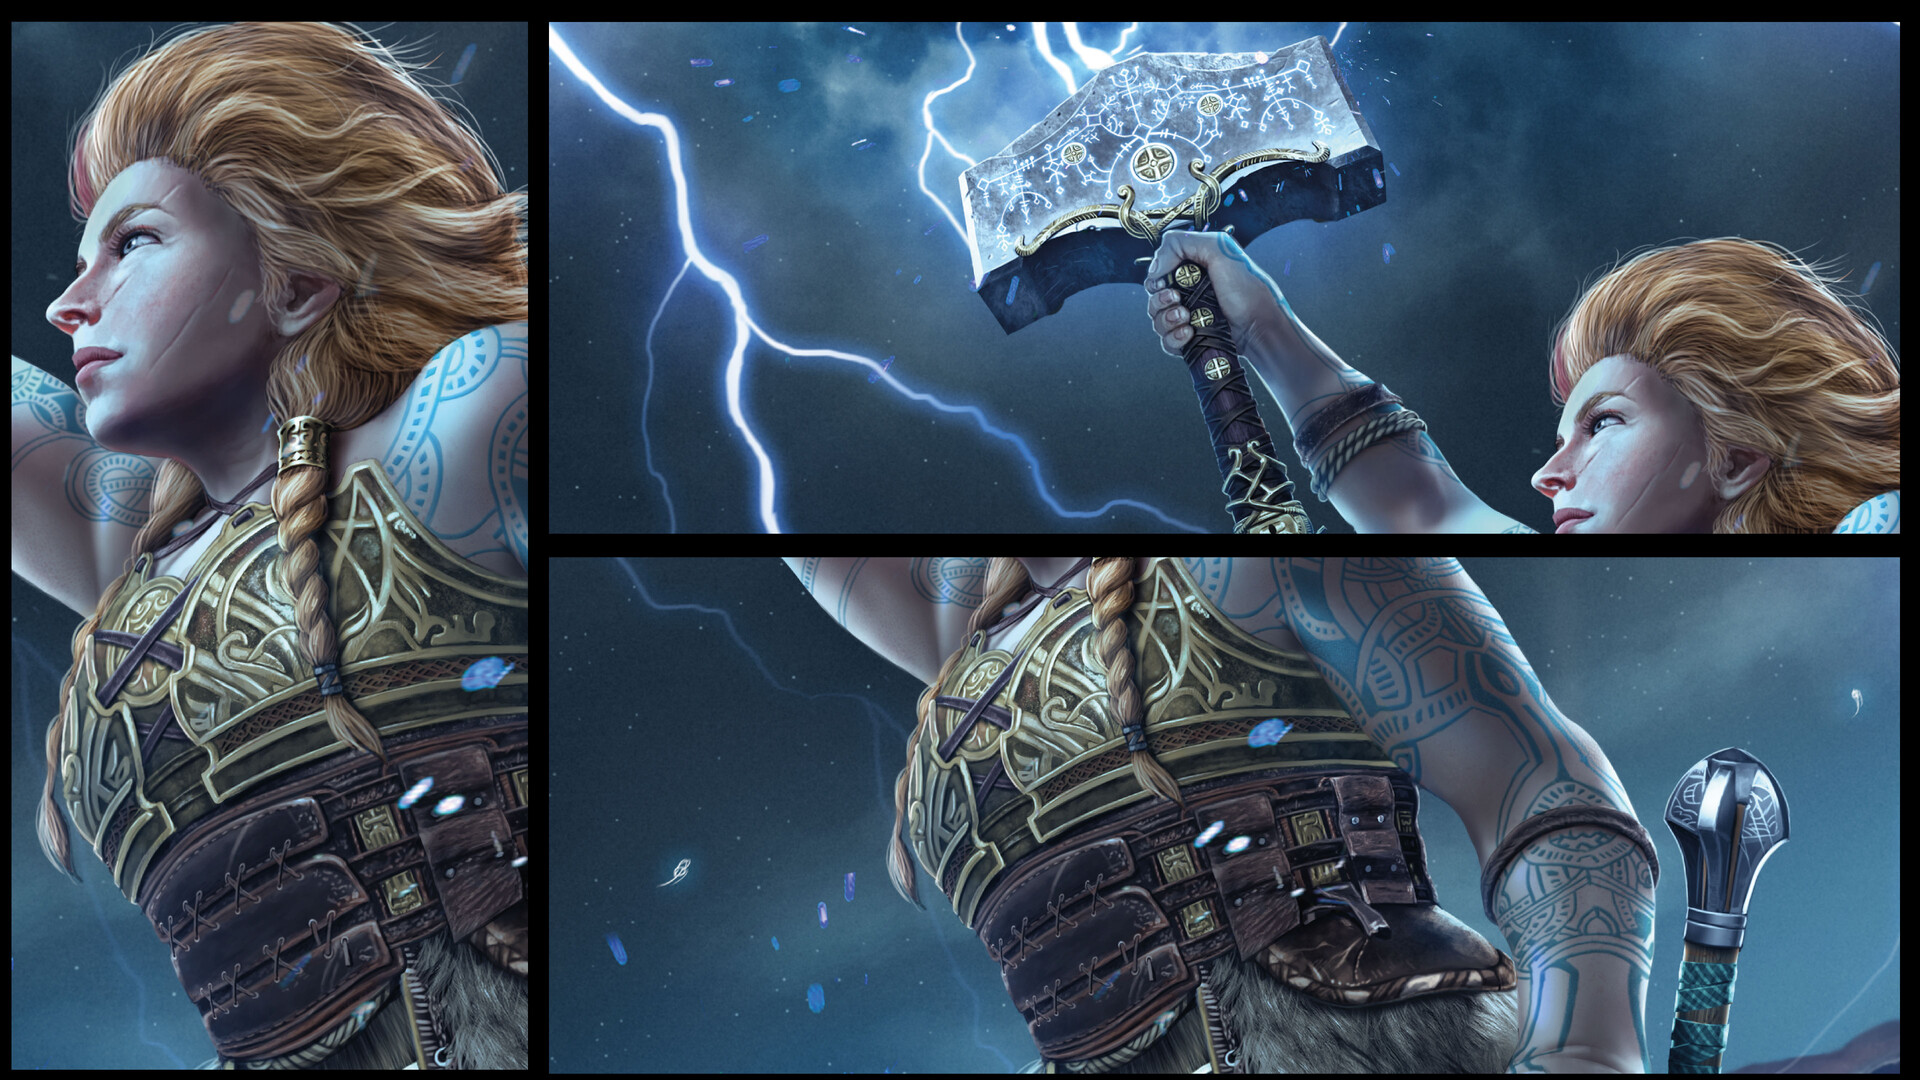 Thrud Thorsdottir - God of War Ragnarok by Gabriel Vitoria